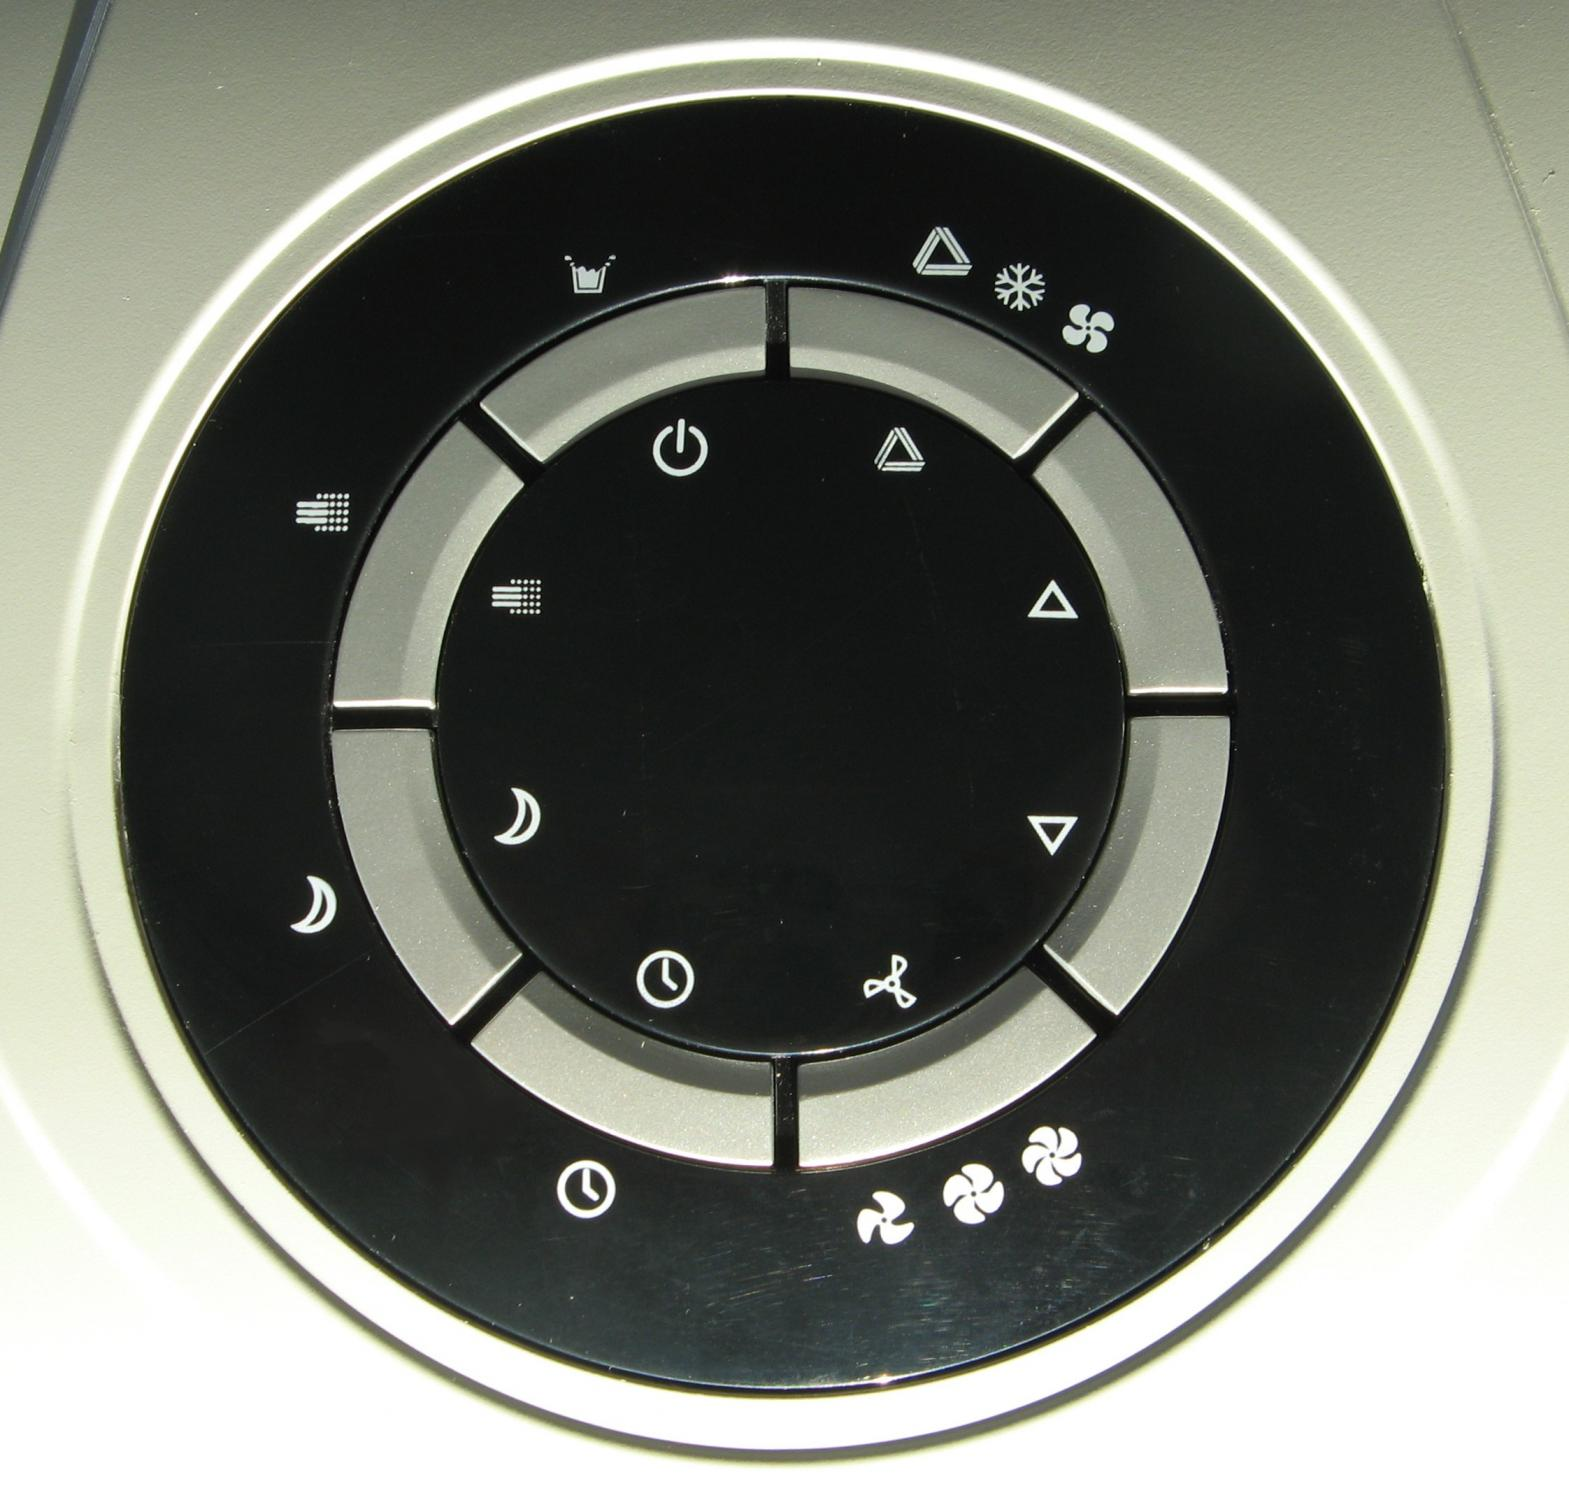 WDH Klimagerät WDH-FGA1263B air conditioner (Max. A) 40 EEK: Raumgröße: Weiß m²